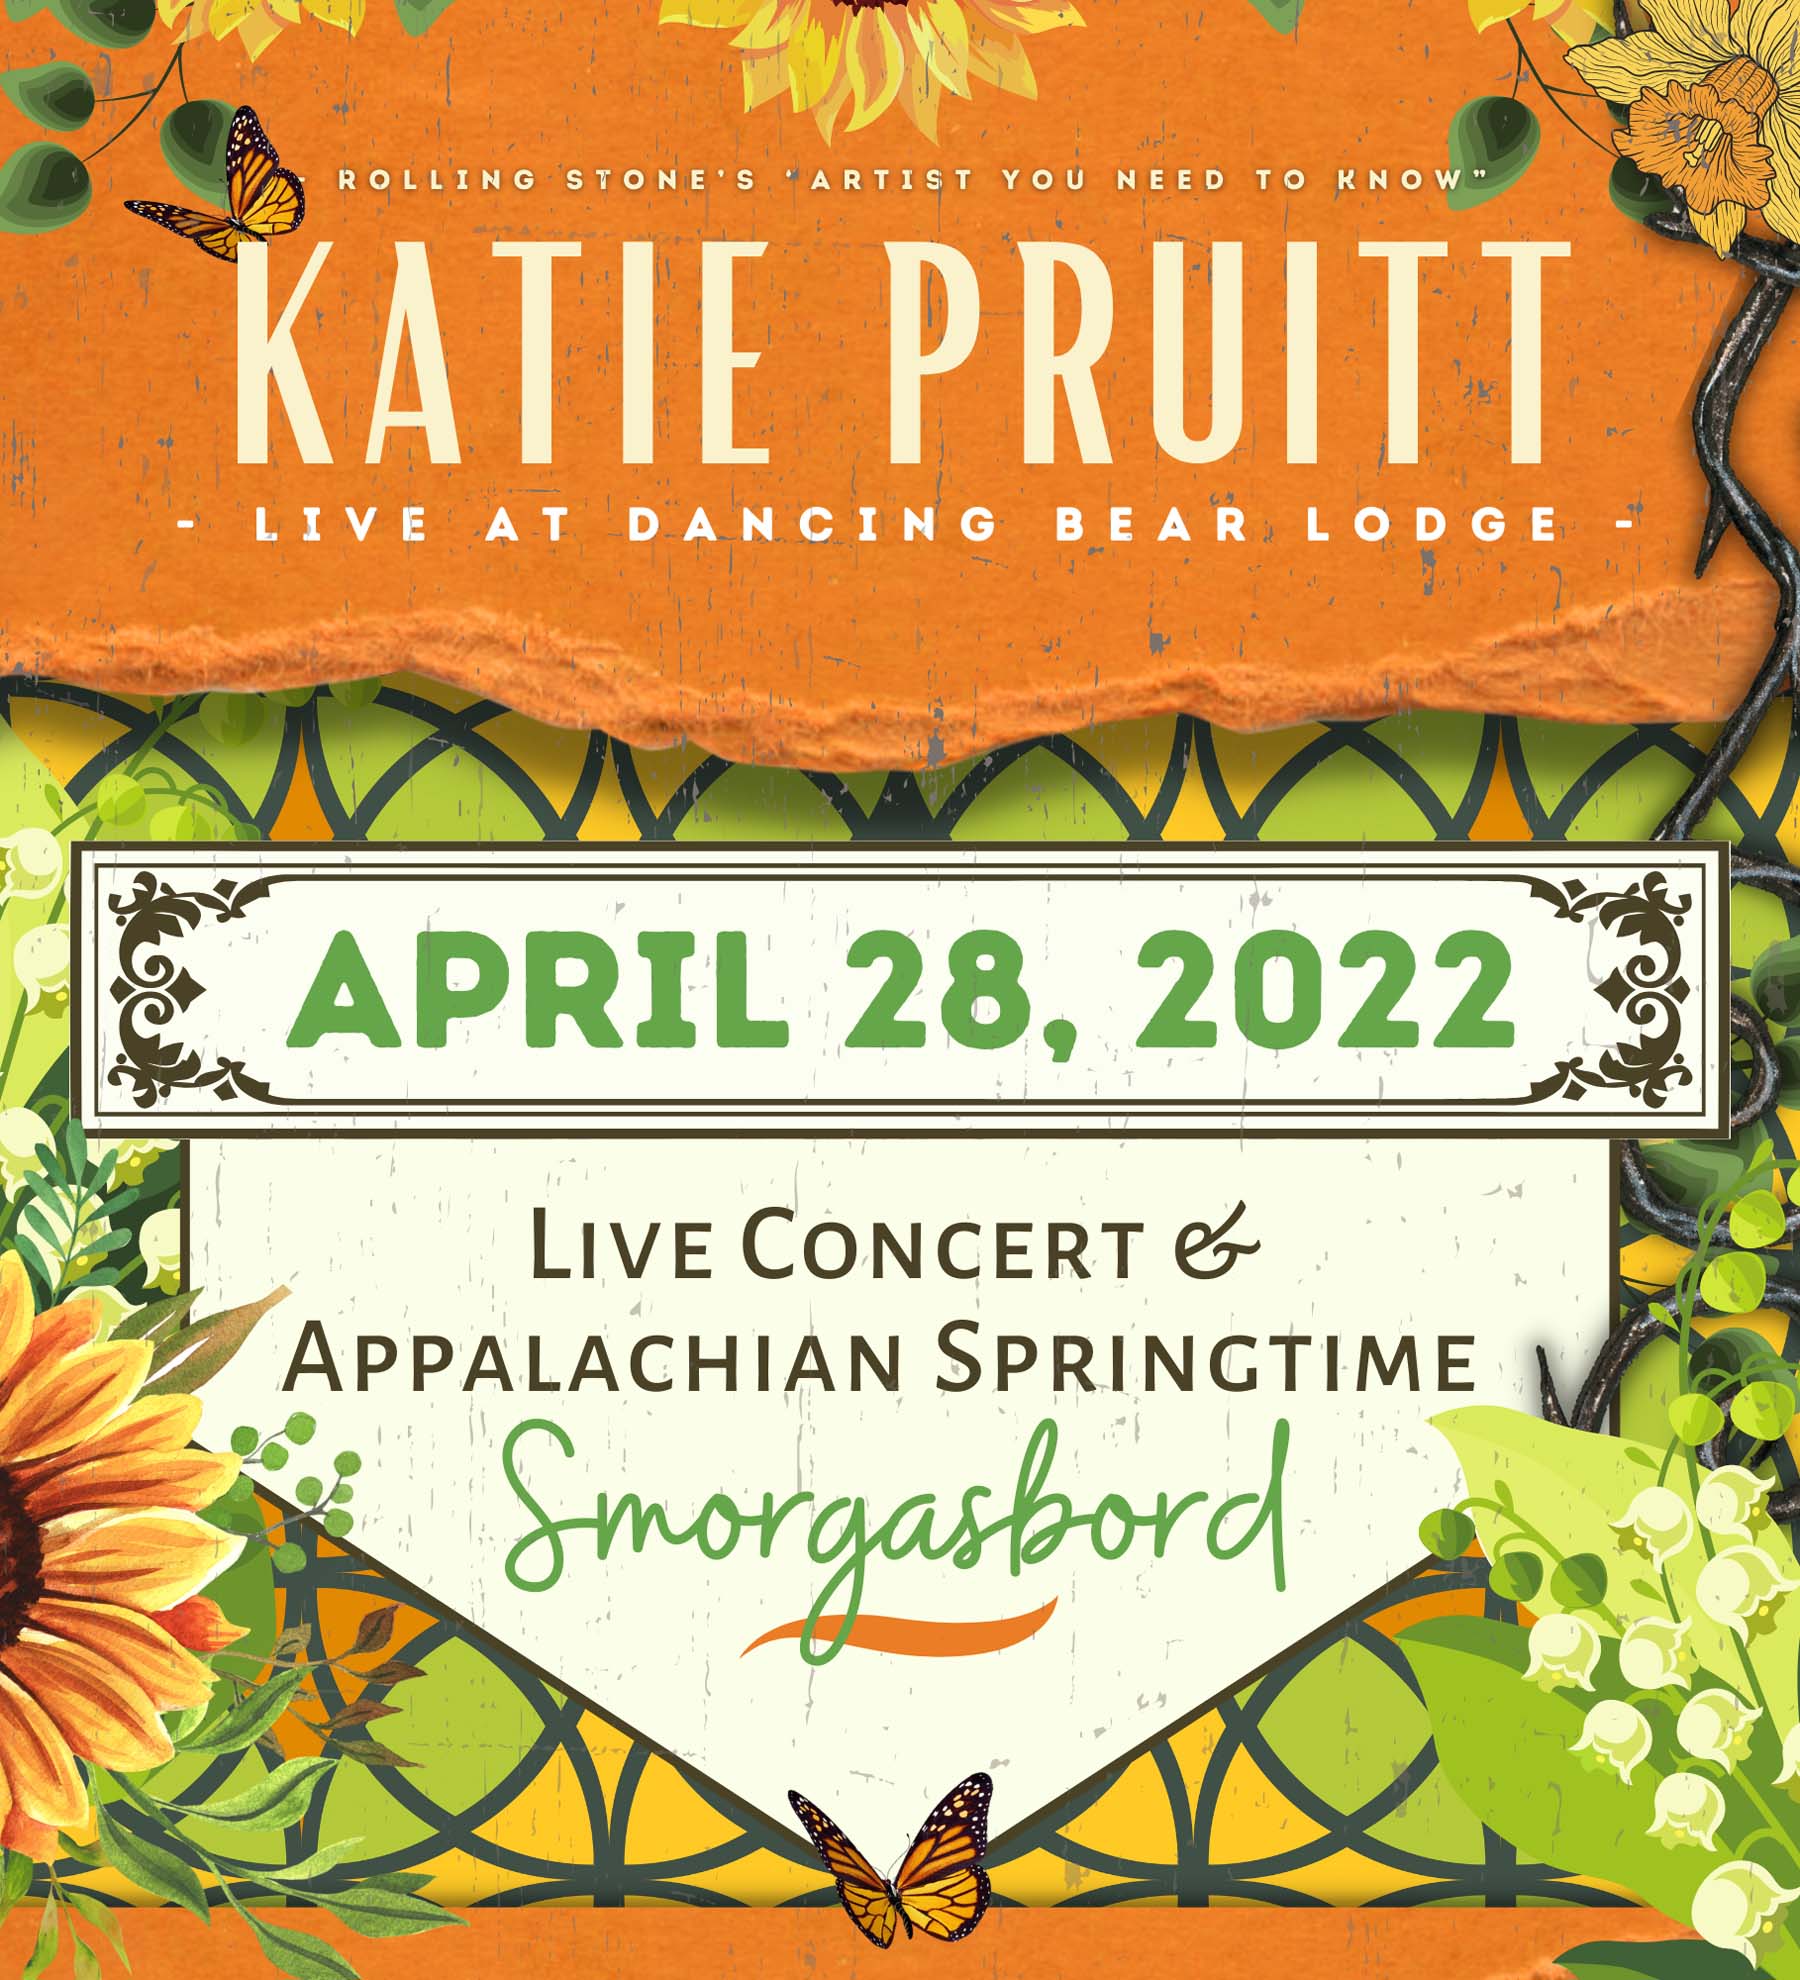 Live Concert and Appalachian Spring Smorgasbord